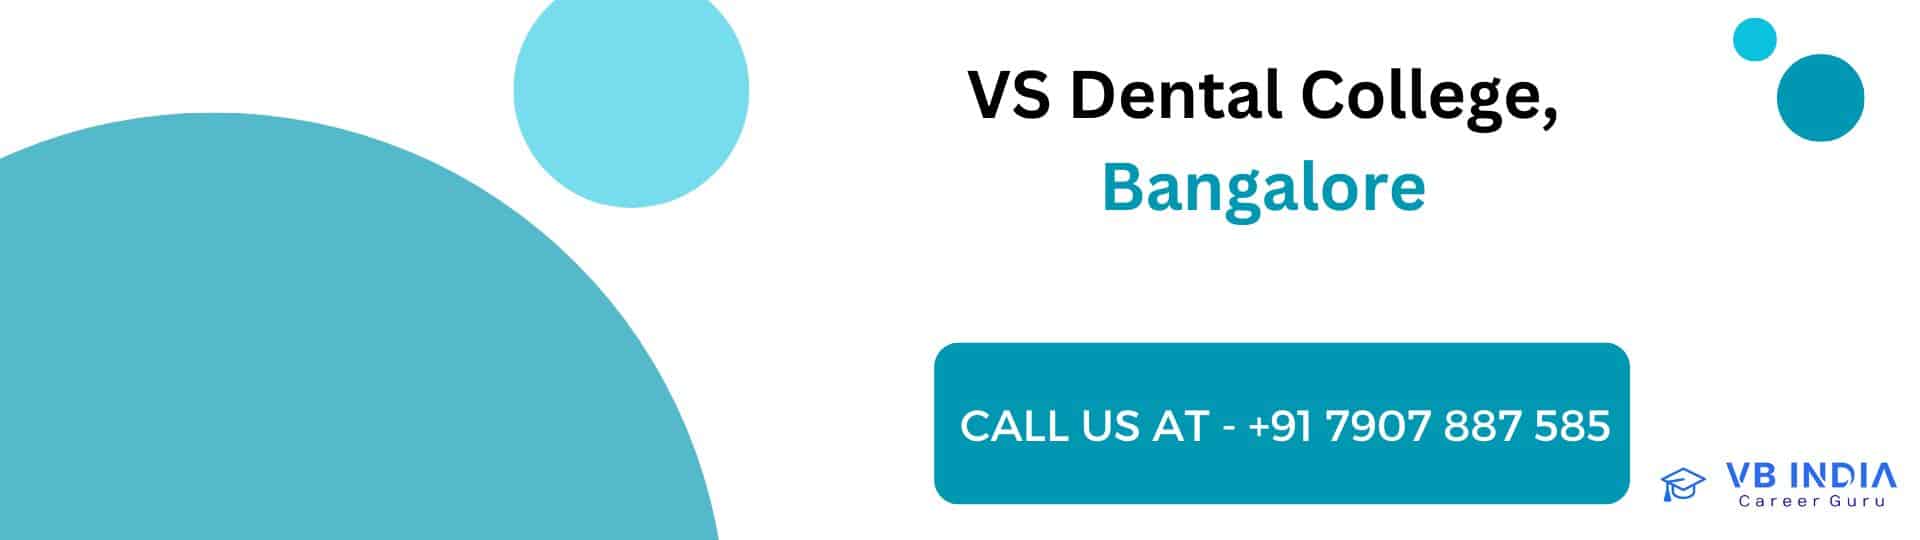 VS Dental College Bangalore